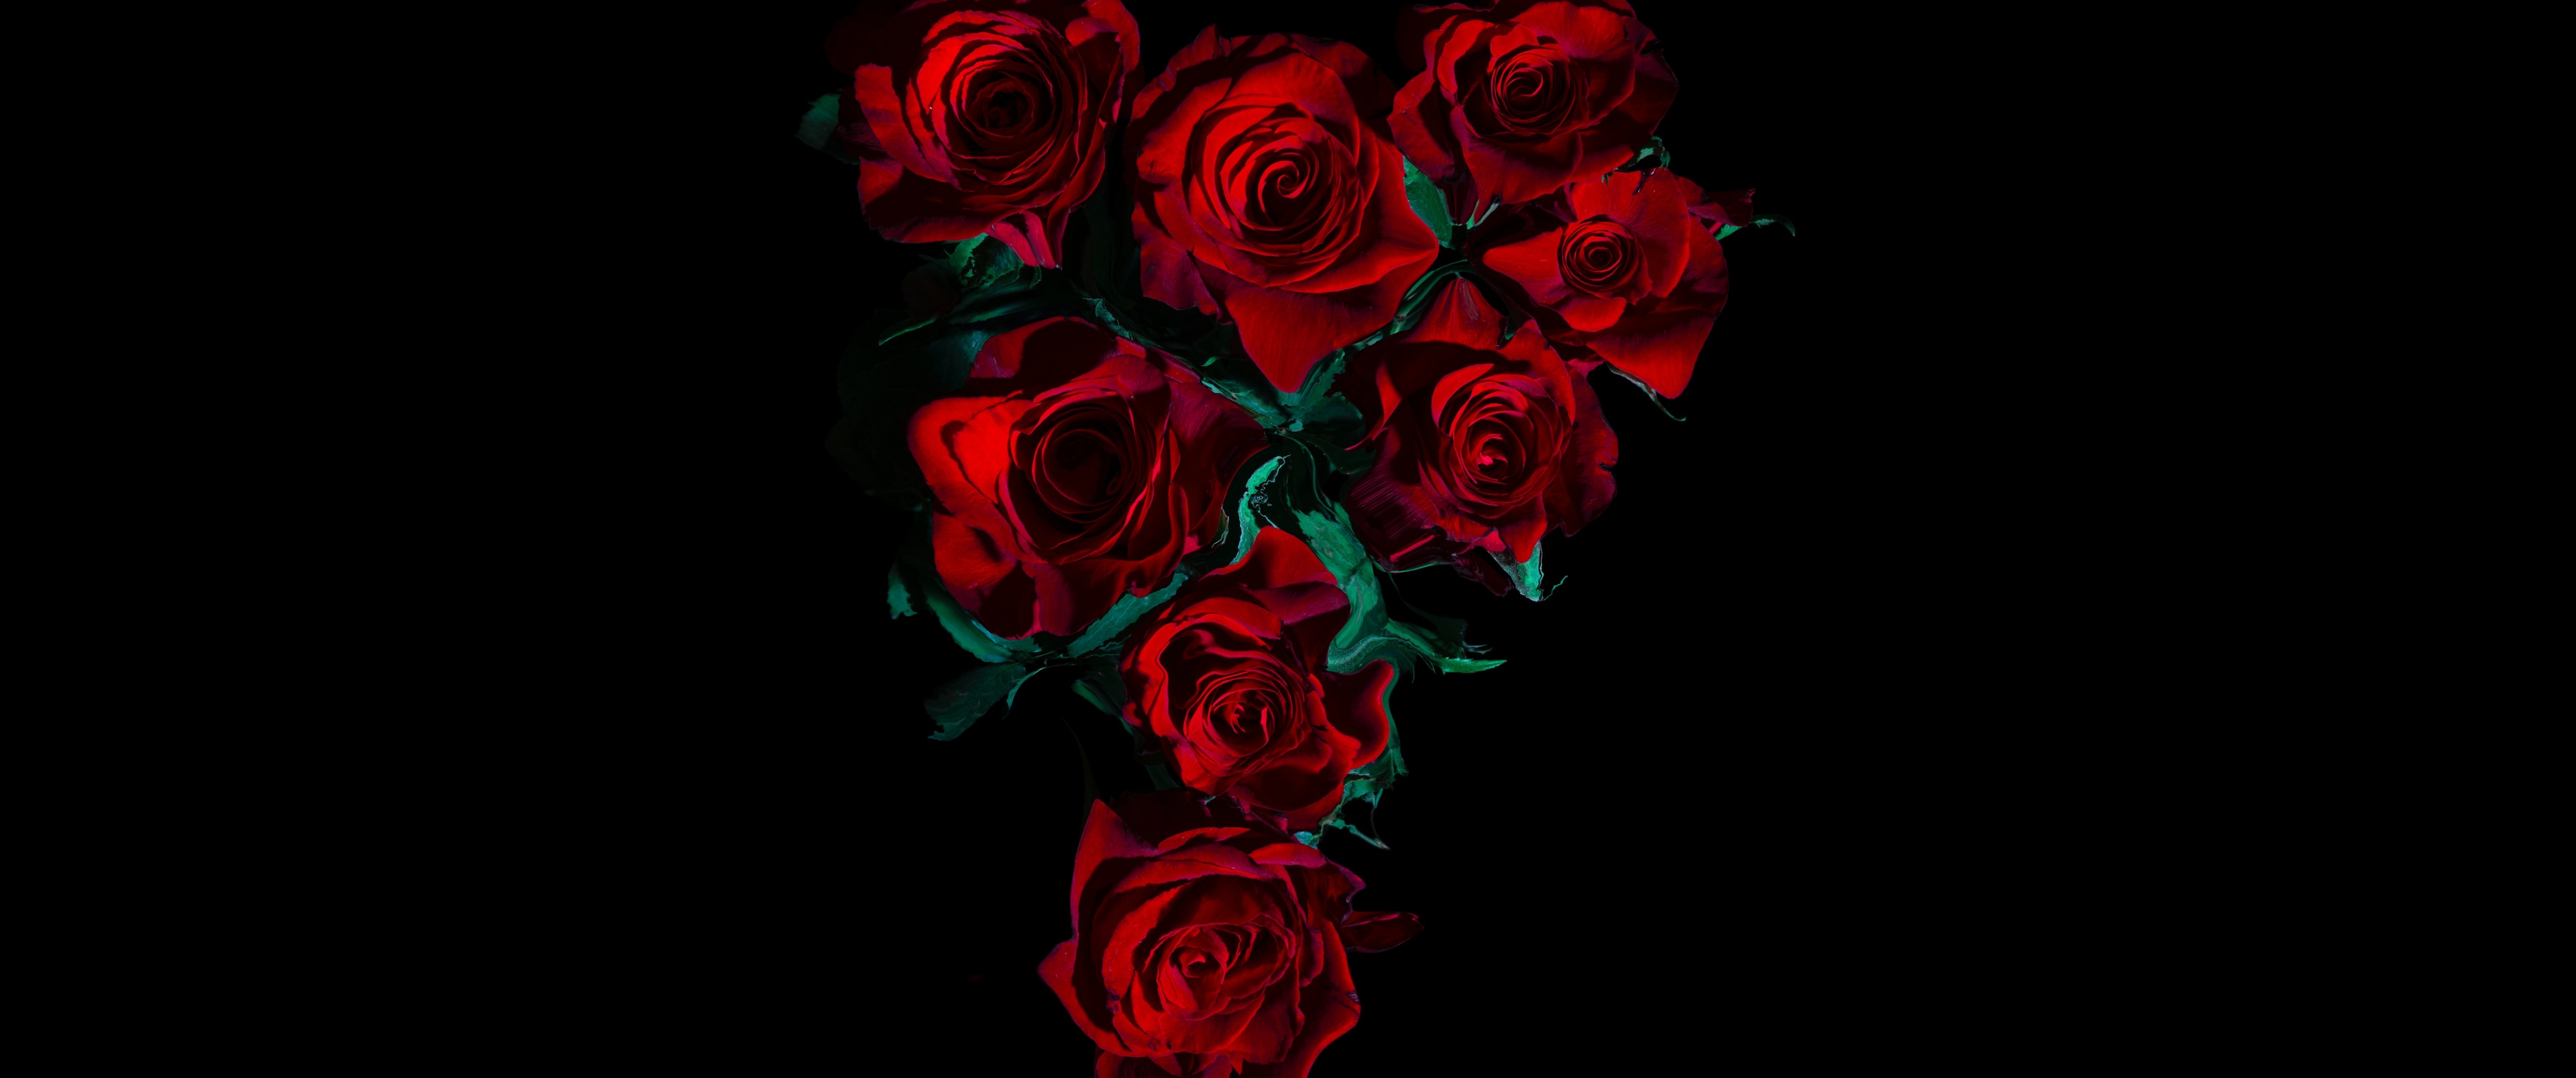 Black Roses 4K Wallpapers  Top Free Black Roses 4K Backgrounds   WallpaperAccess